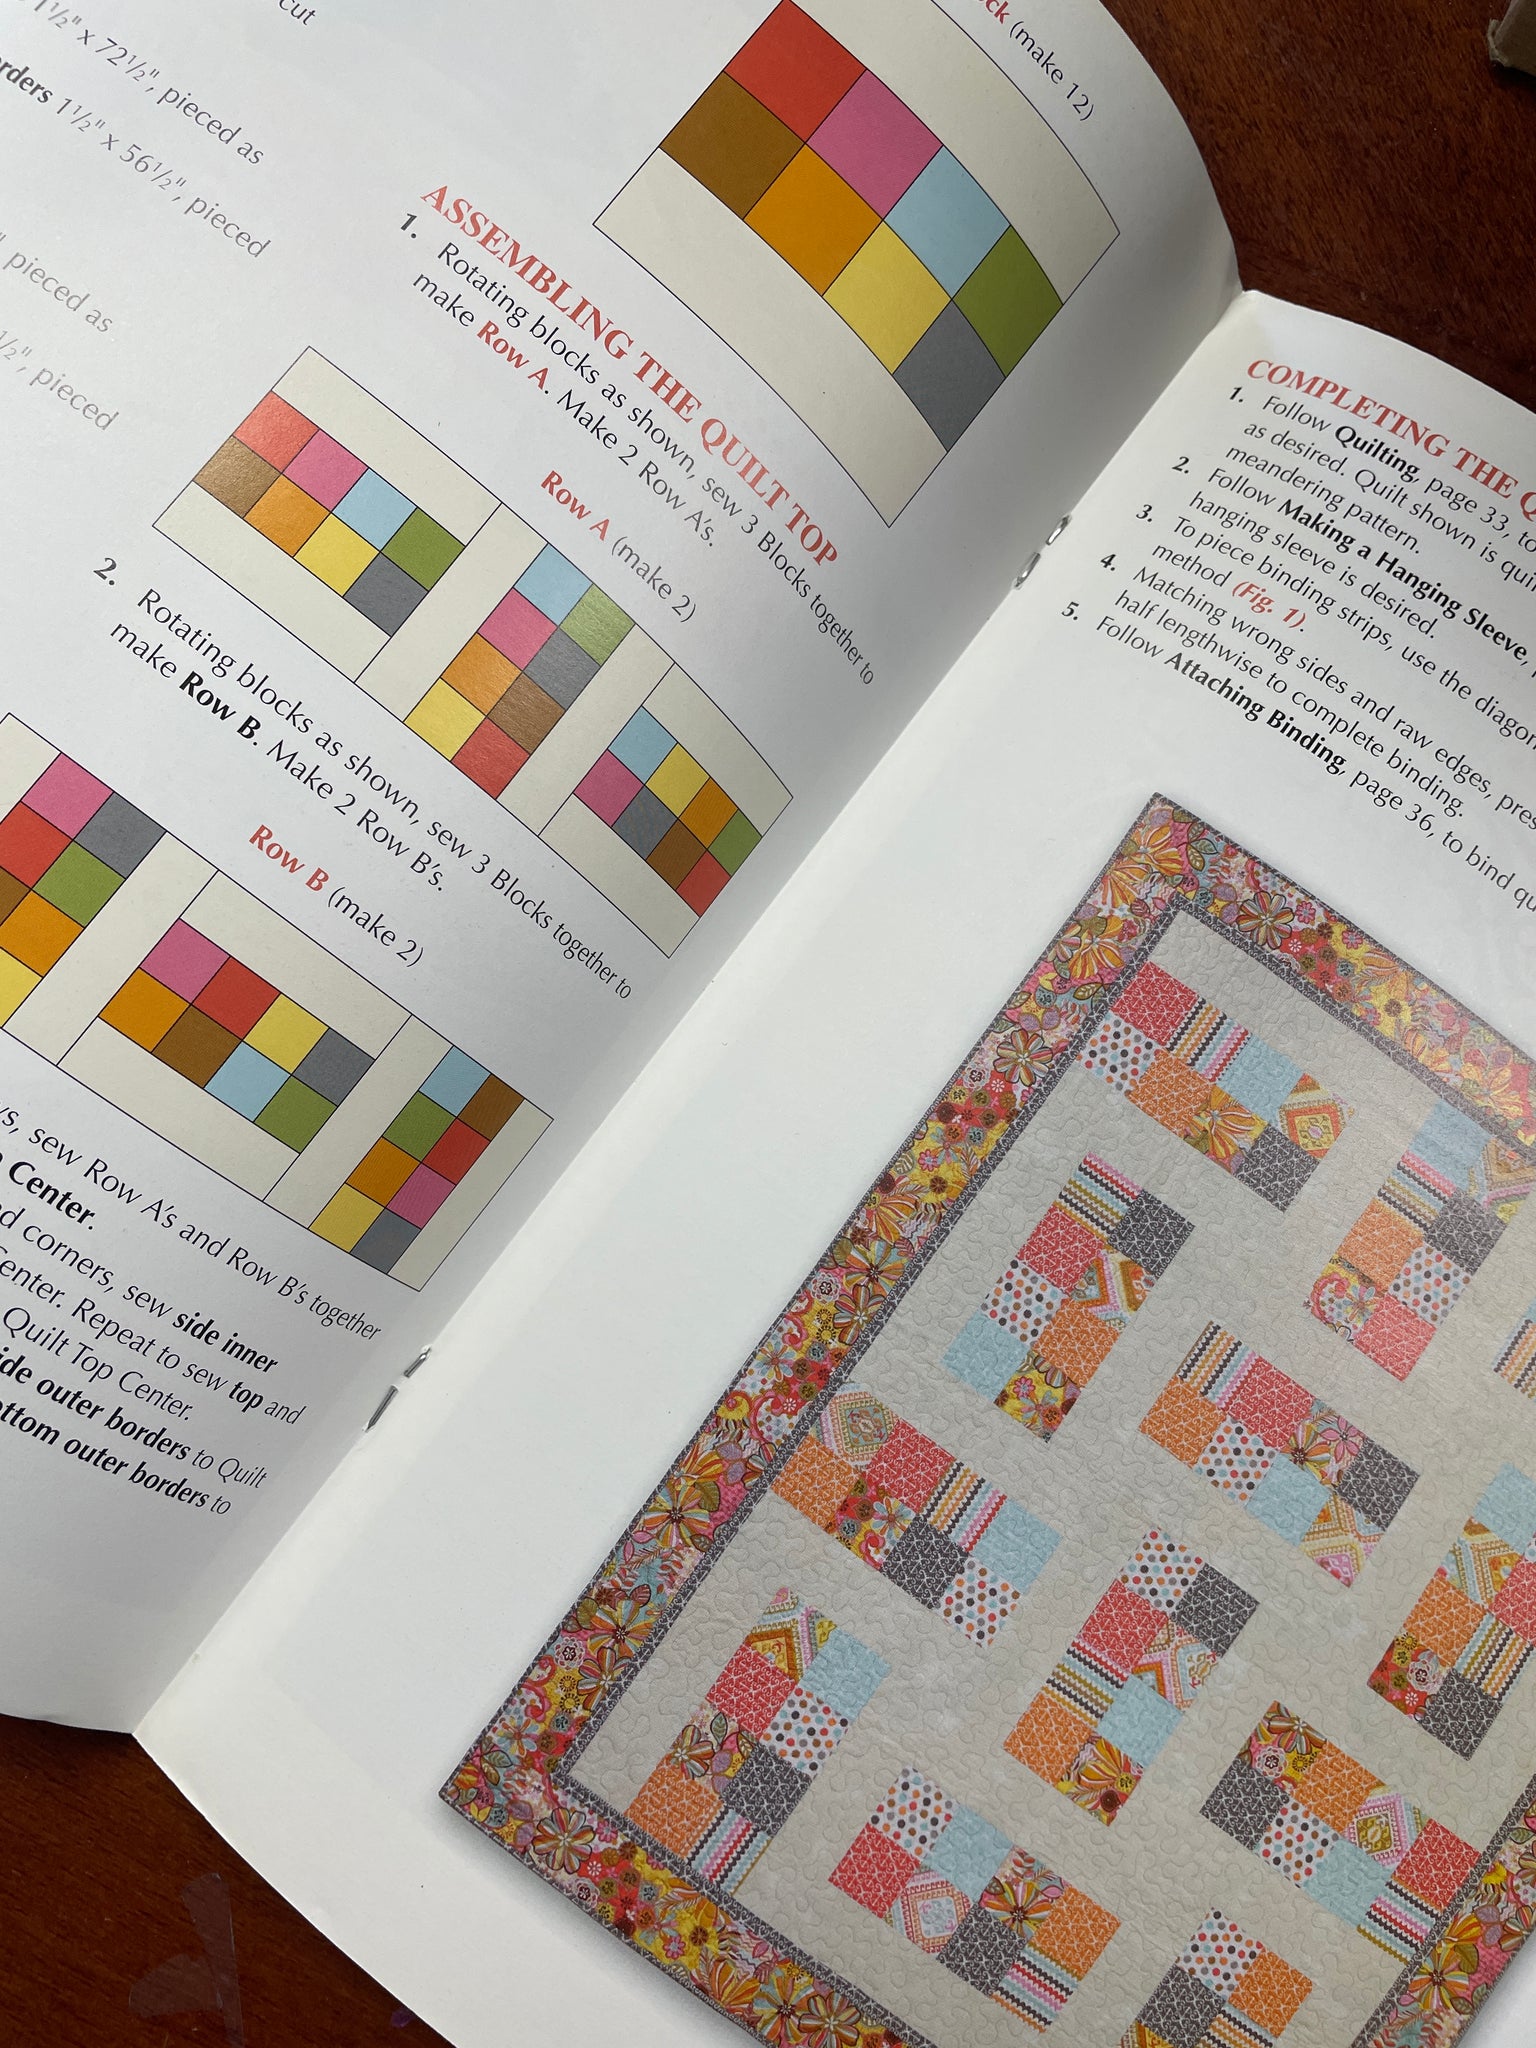 2013 Quilting Book - "Precut Quilts"